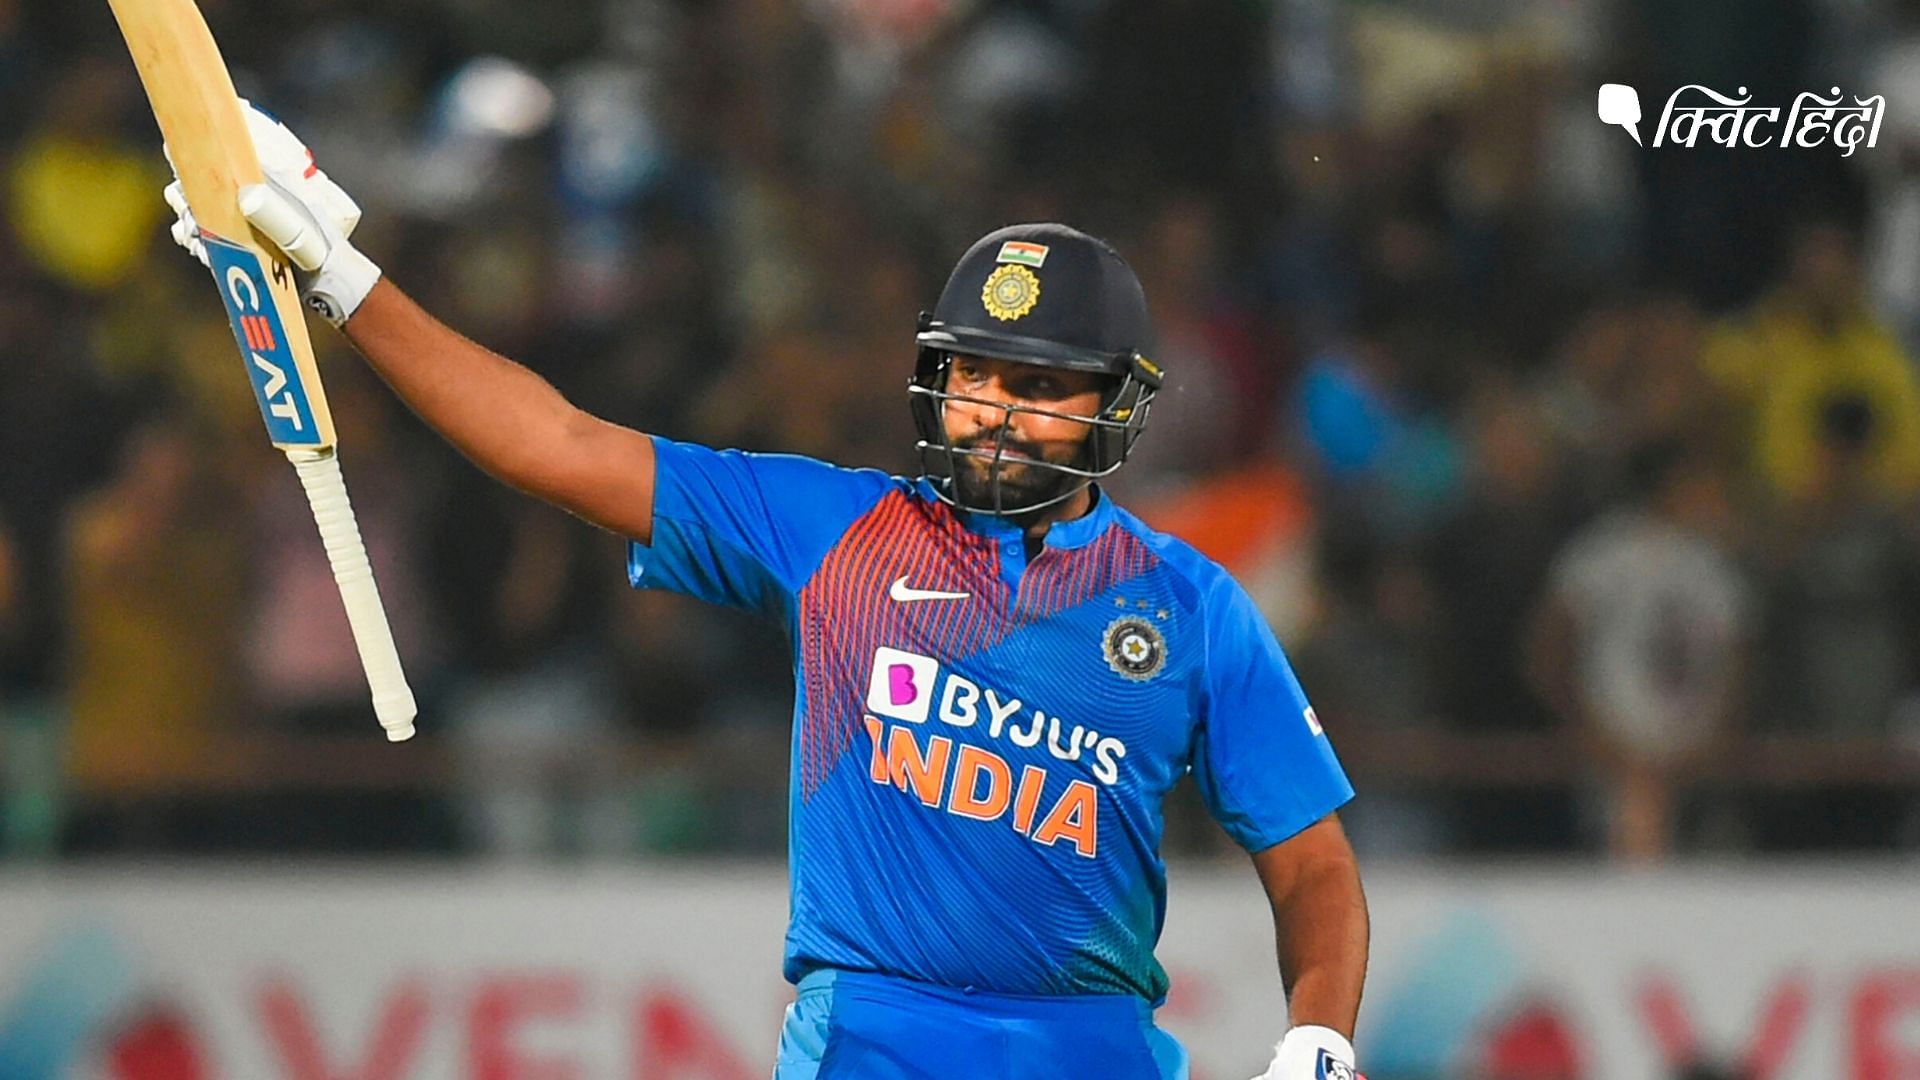 India vs Bangladesh, 2nd T20I Match Live Score Updates in Hindi: रोहित शर्मा की तूफानी बल्लेबाजी ने भारत के लिए लक्ष्य आसान कर दिया.